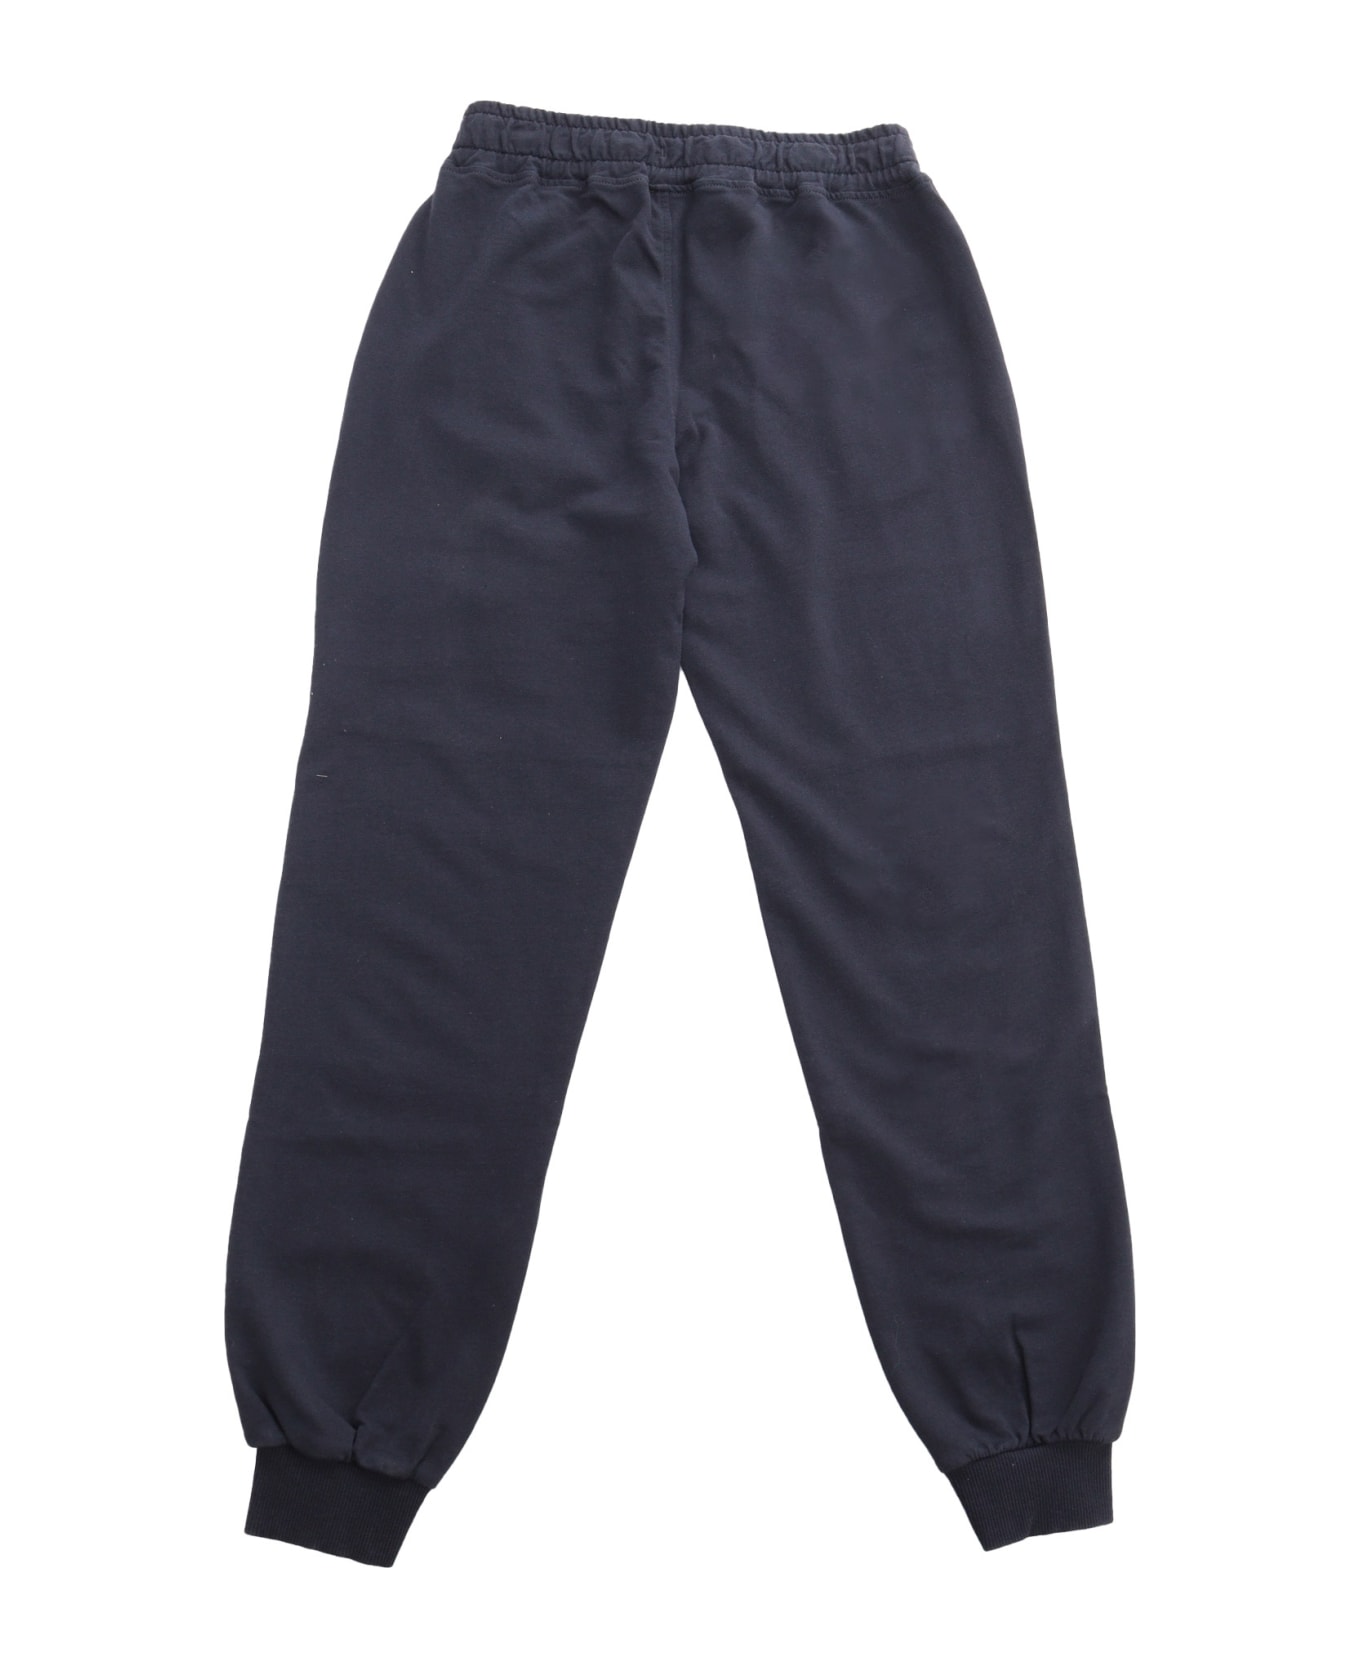 C.P. Company Undersixteen Blue Joggers Pants - BLUE